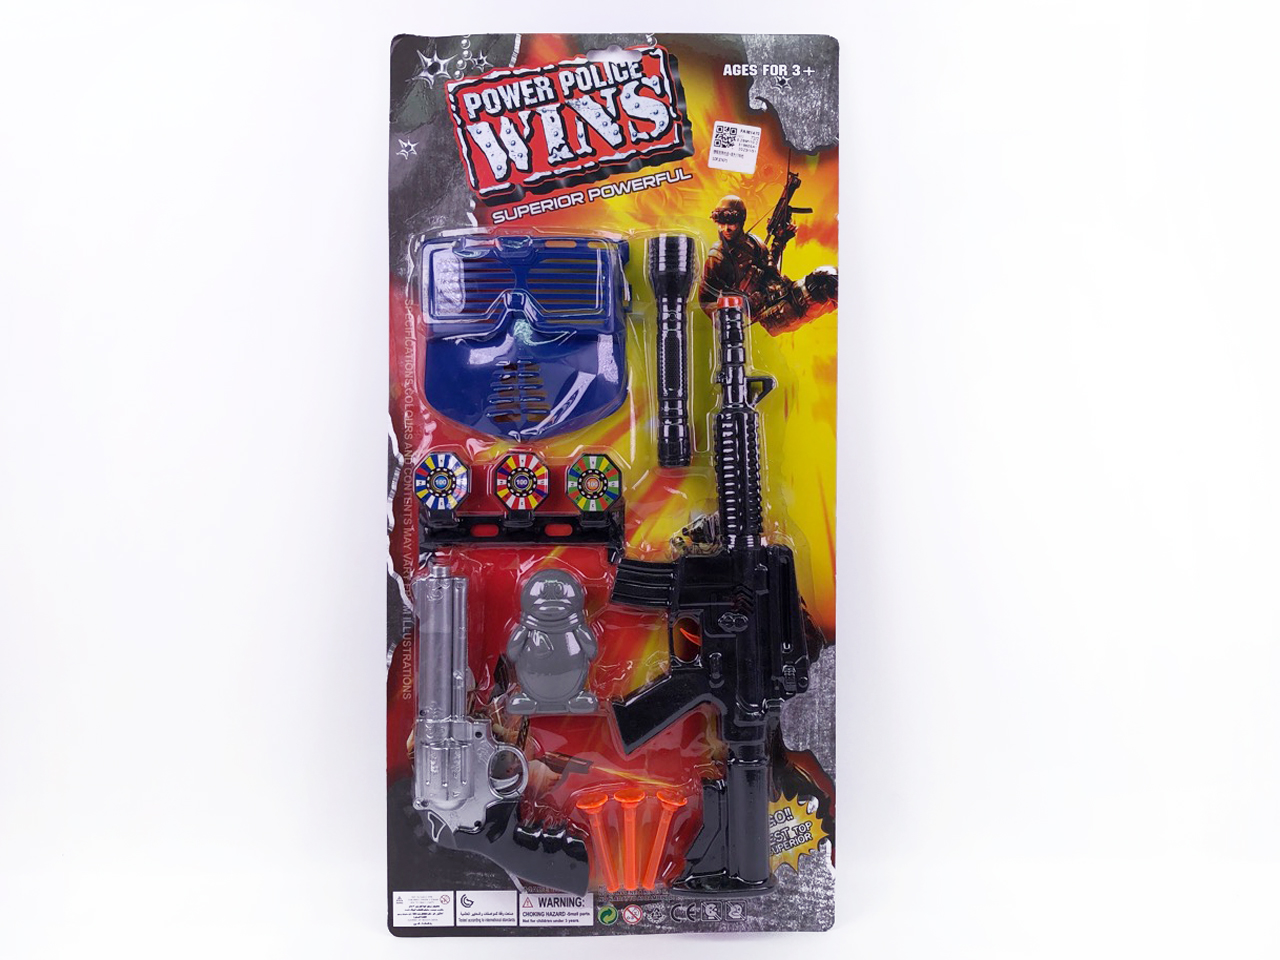 Soft Bullet Gun Set & Toy Gun toys